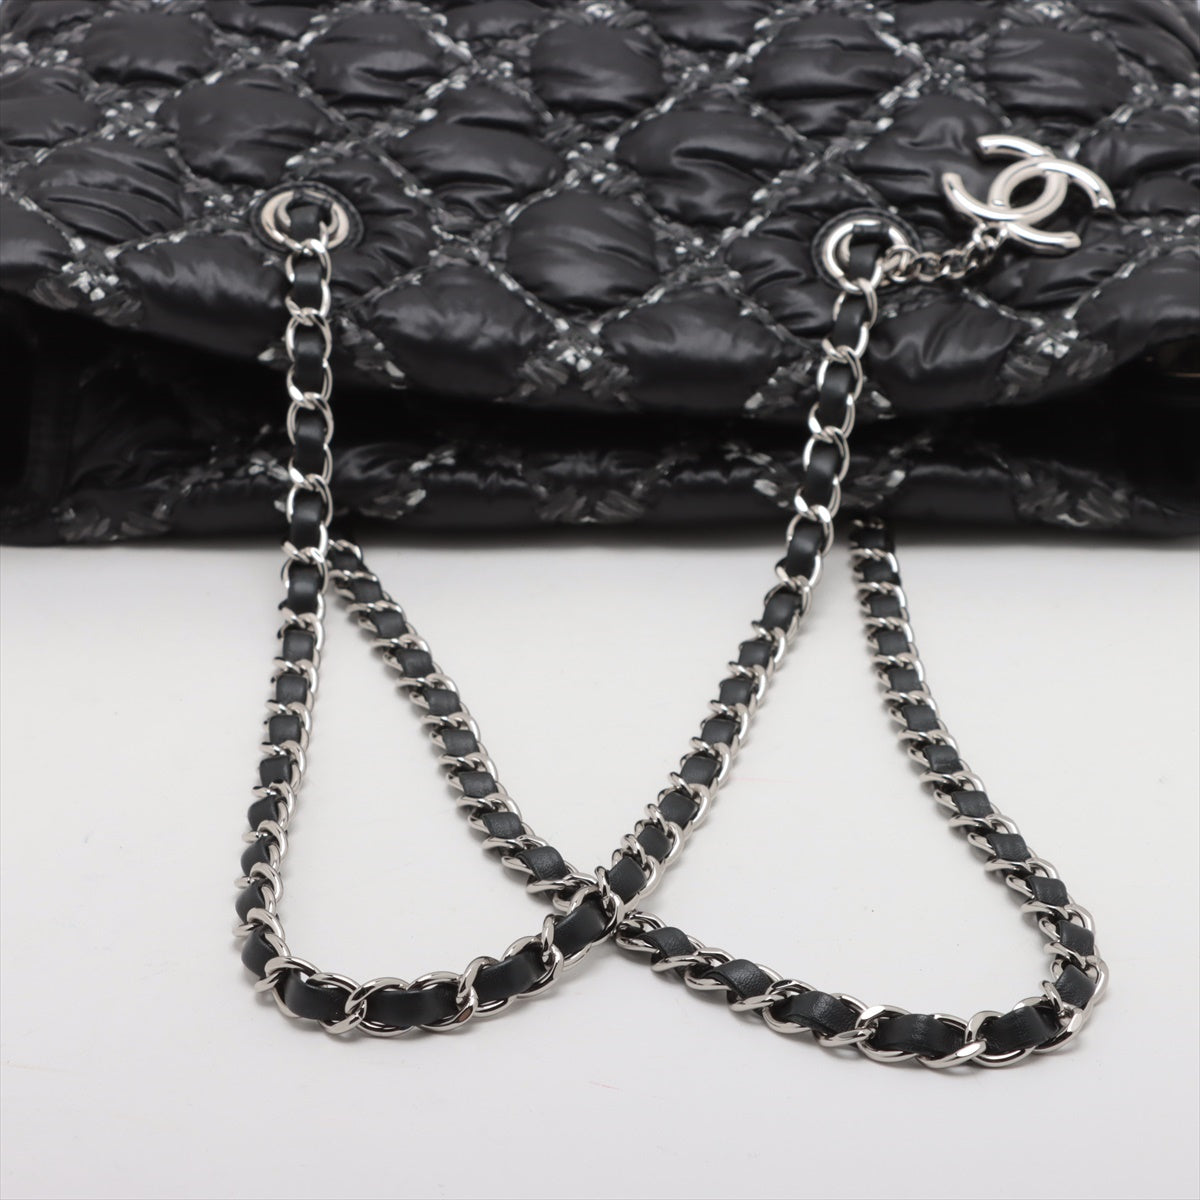 Chanel Paris Byzance Nylon Chain Shoulder Bag Black Silver Metal Fittings 14XXXXXX